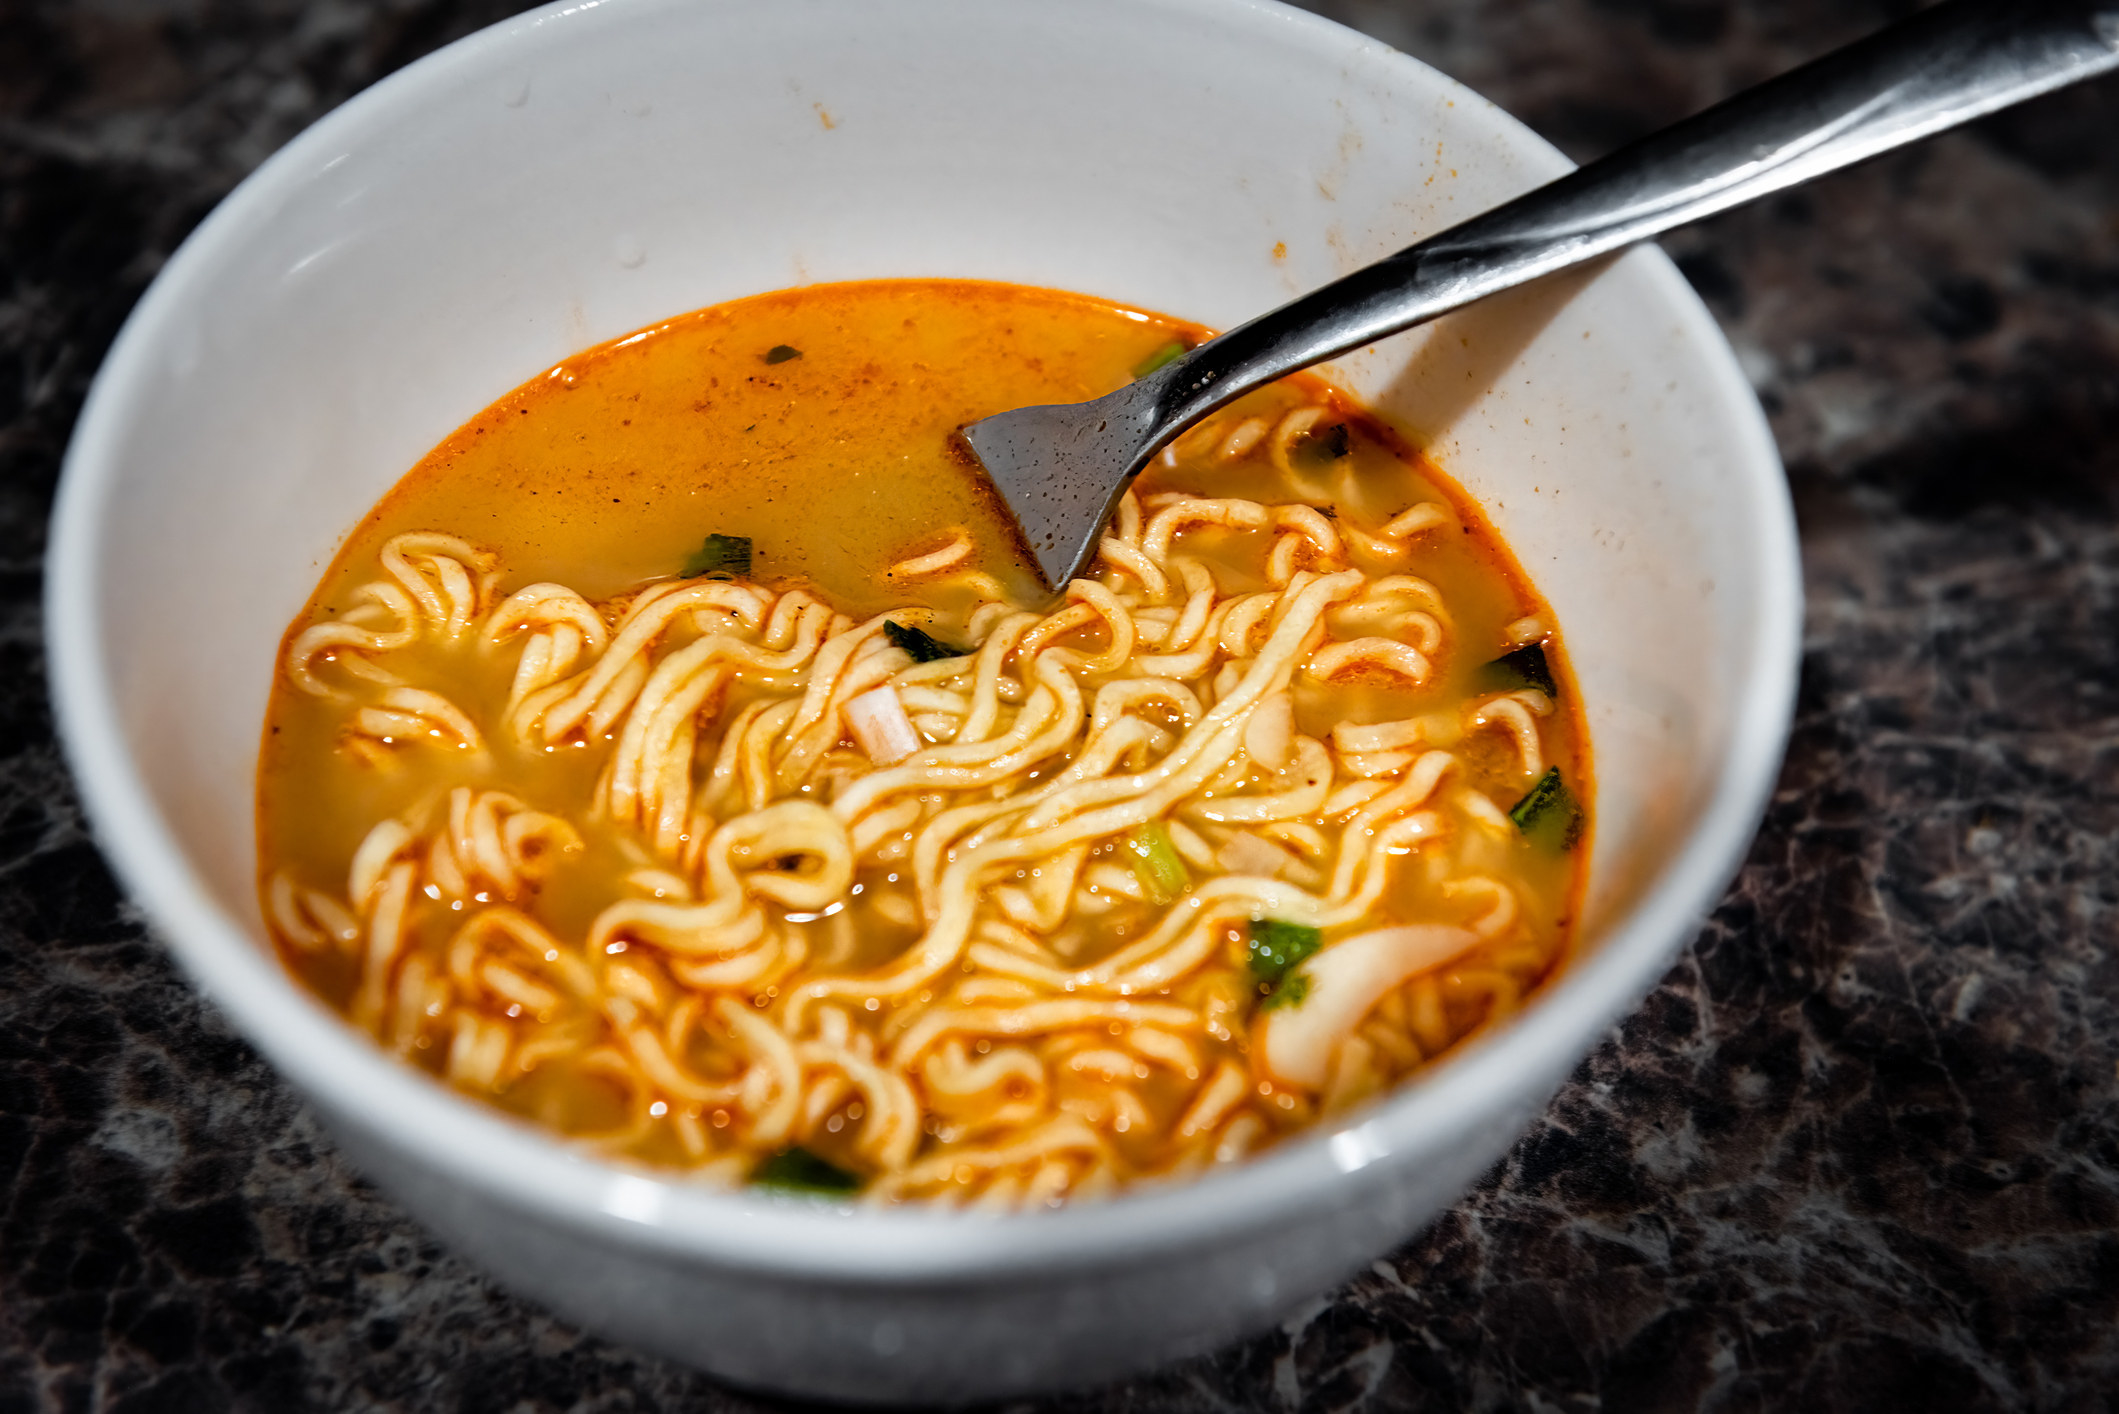 A bowl of spicy ramen noodles.